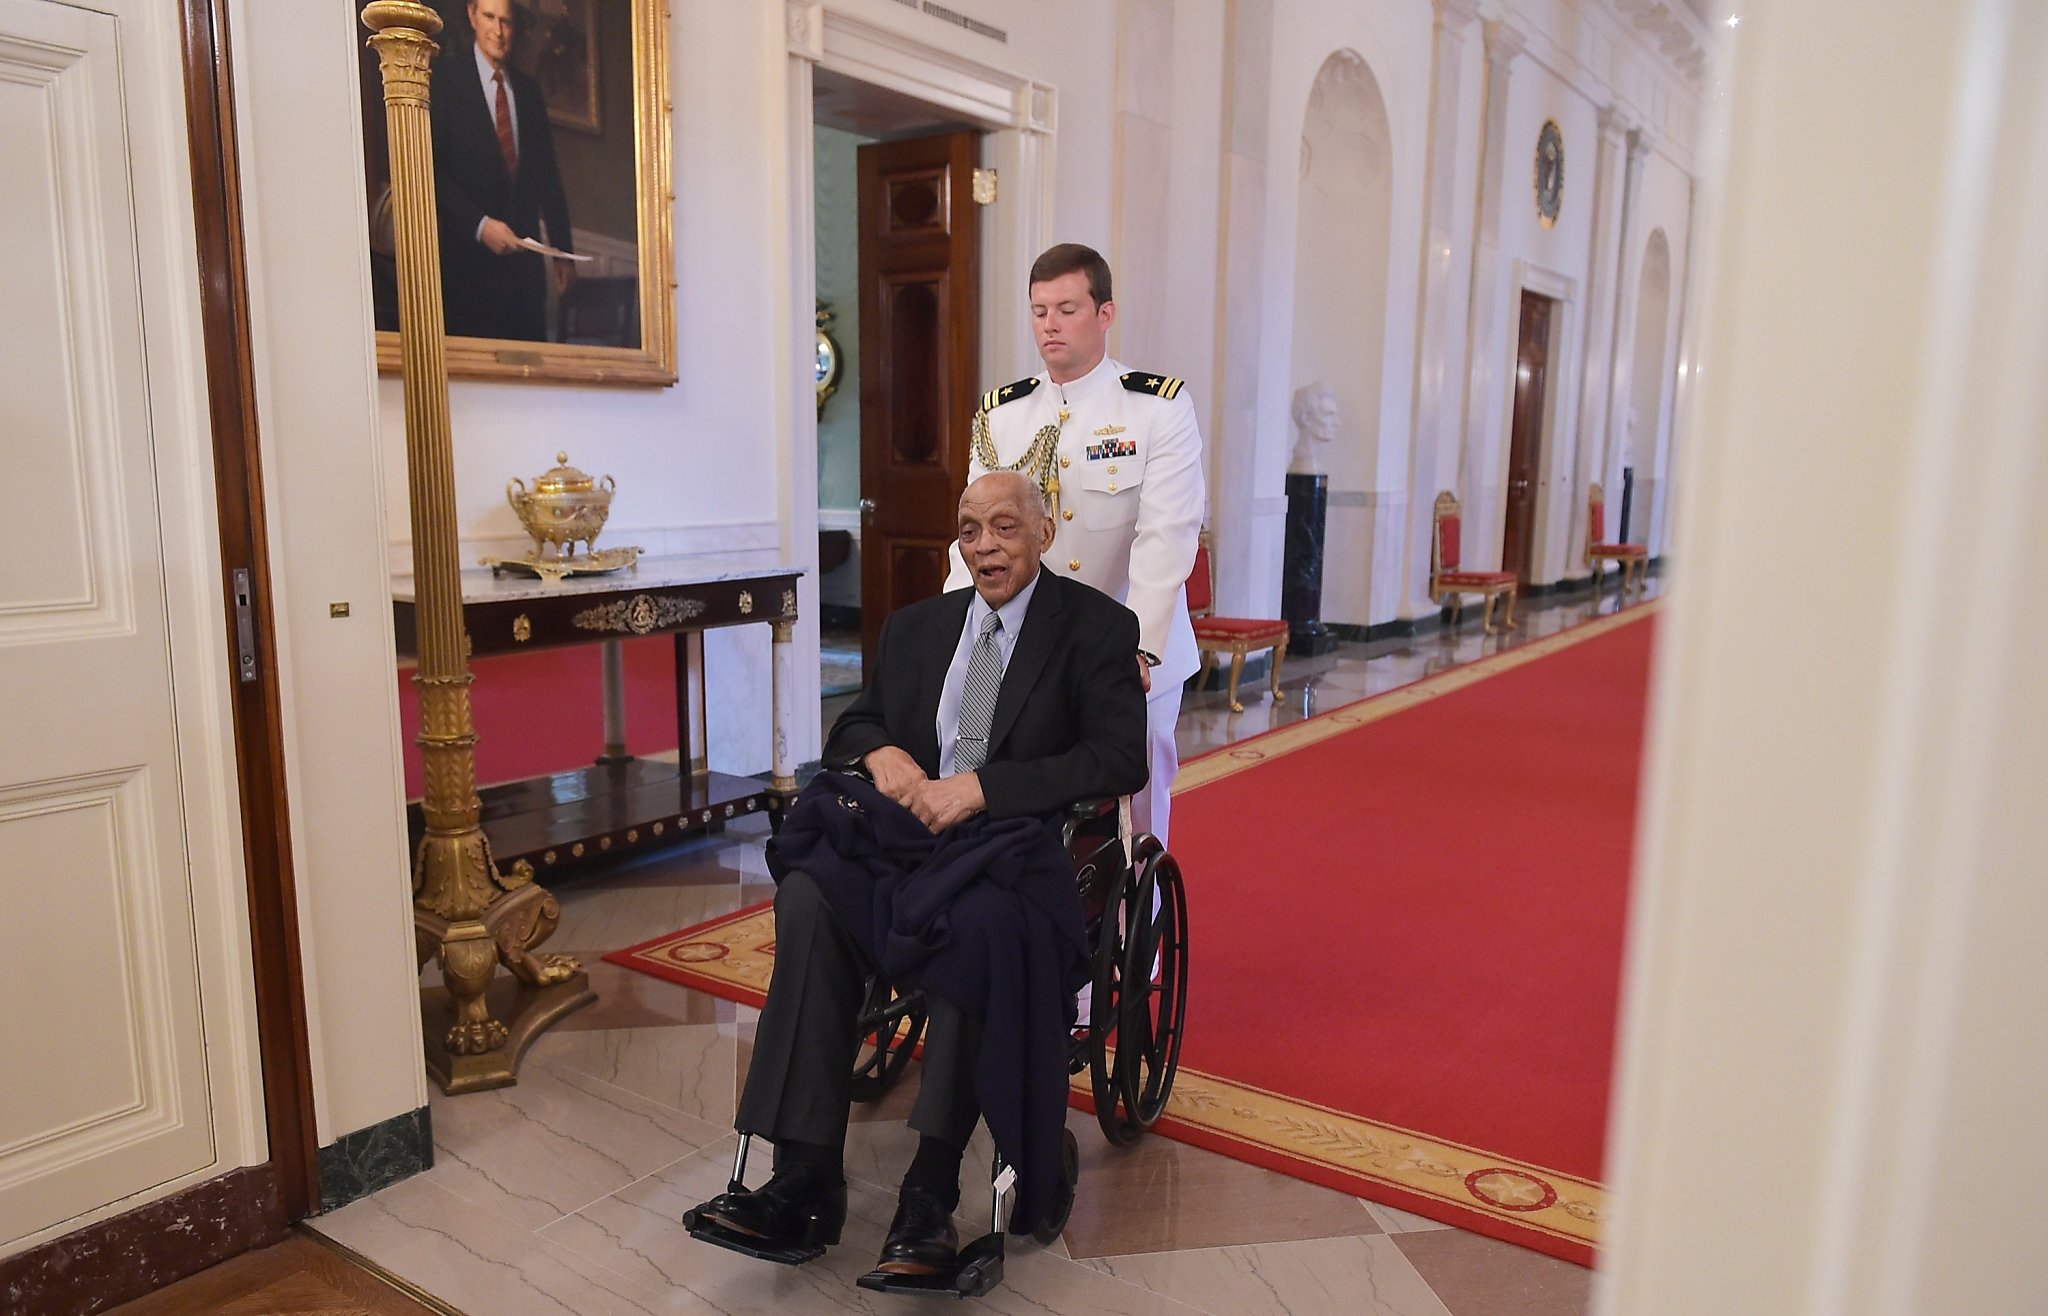 Joe Panik and his girlfriend at the White House -- June 4, 2015